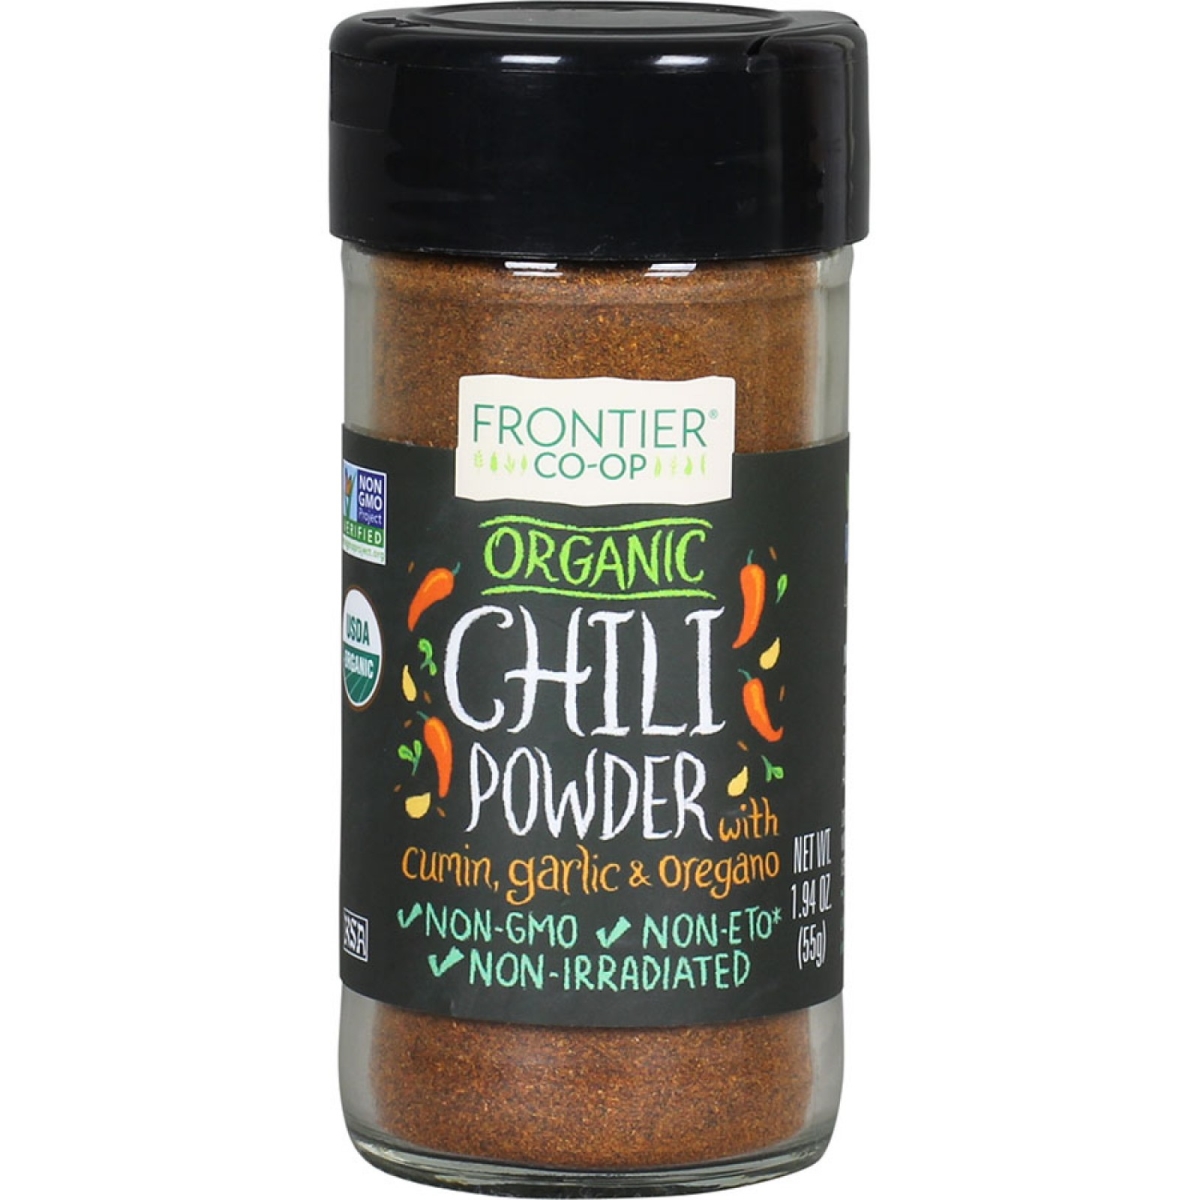 18361 1.94 Oz Organic Chili Powder Bottle